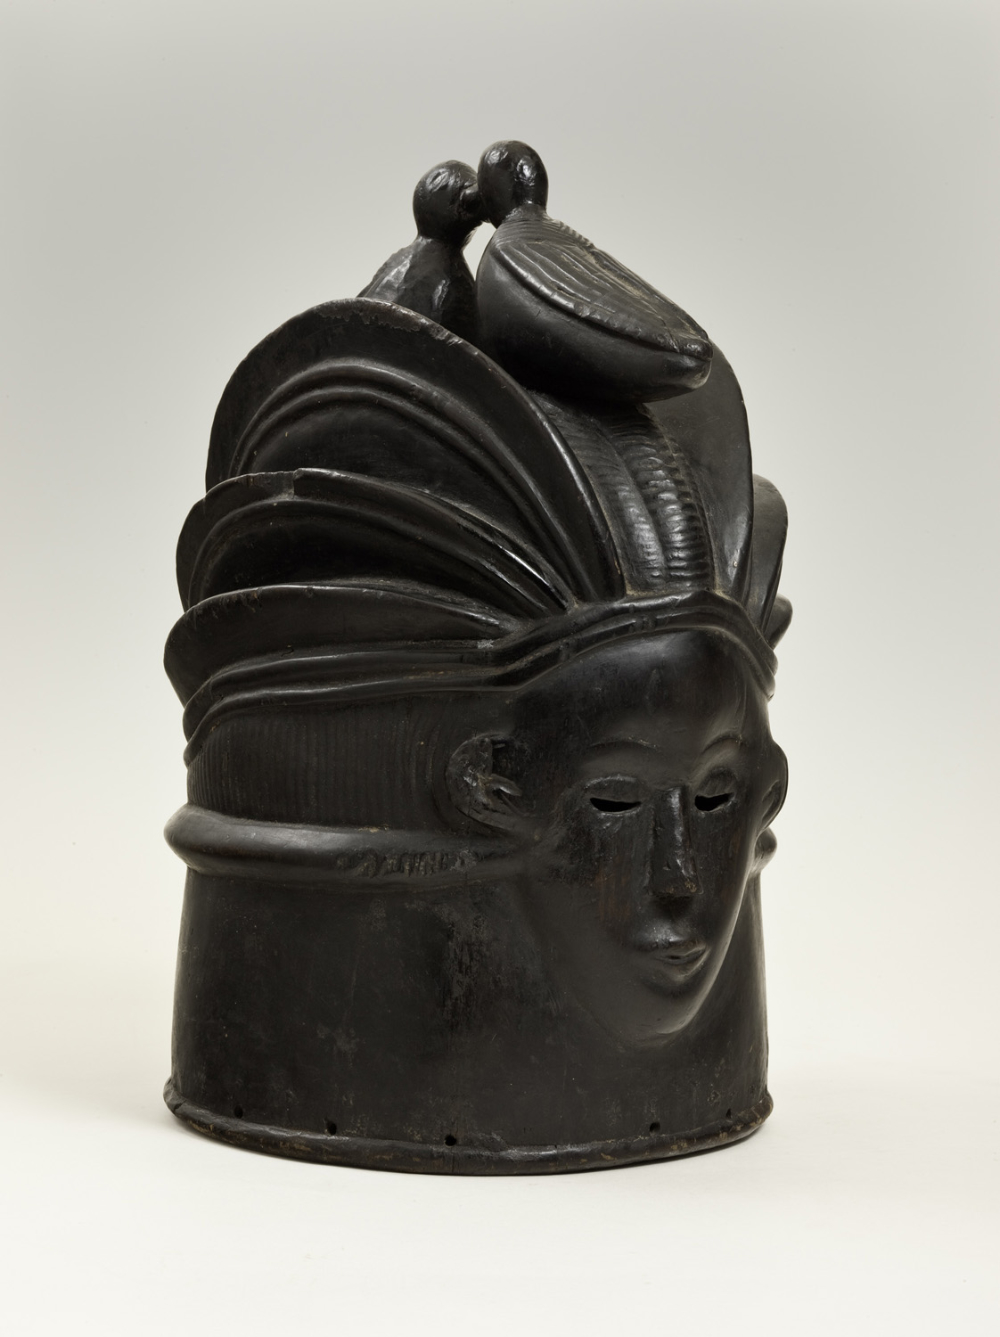 thumbnail of Helmet mask (sowei) from Mende, Sierra. medium: wood, black. dimensions: 16 x 8 inches